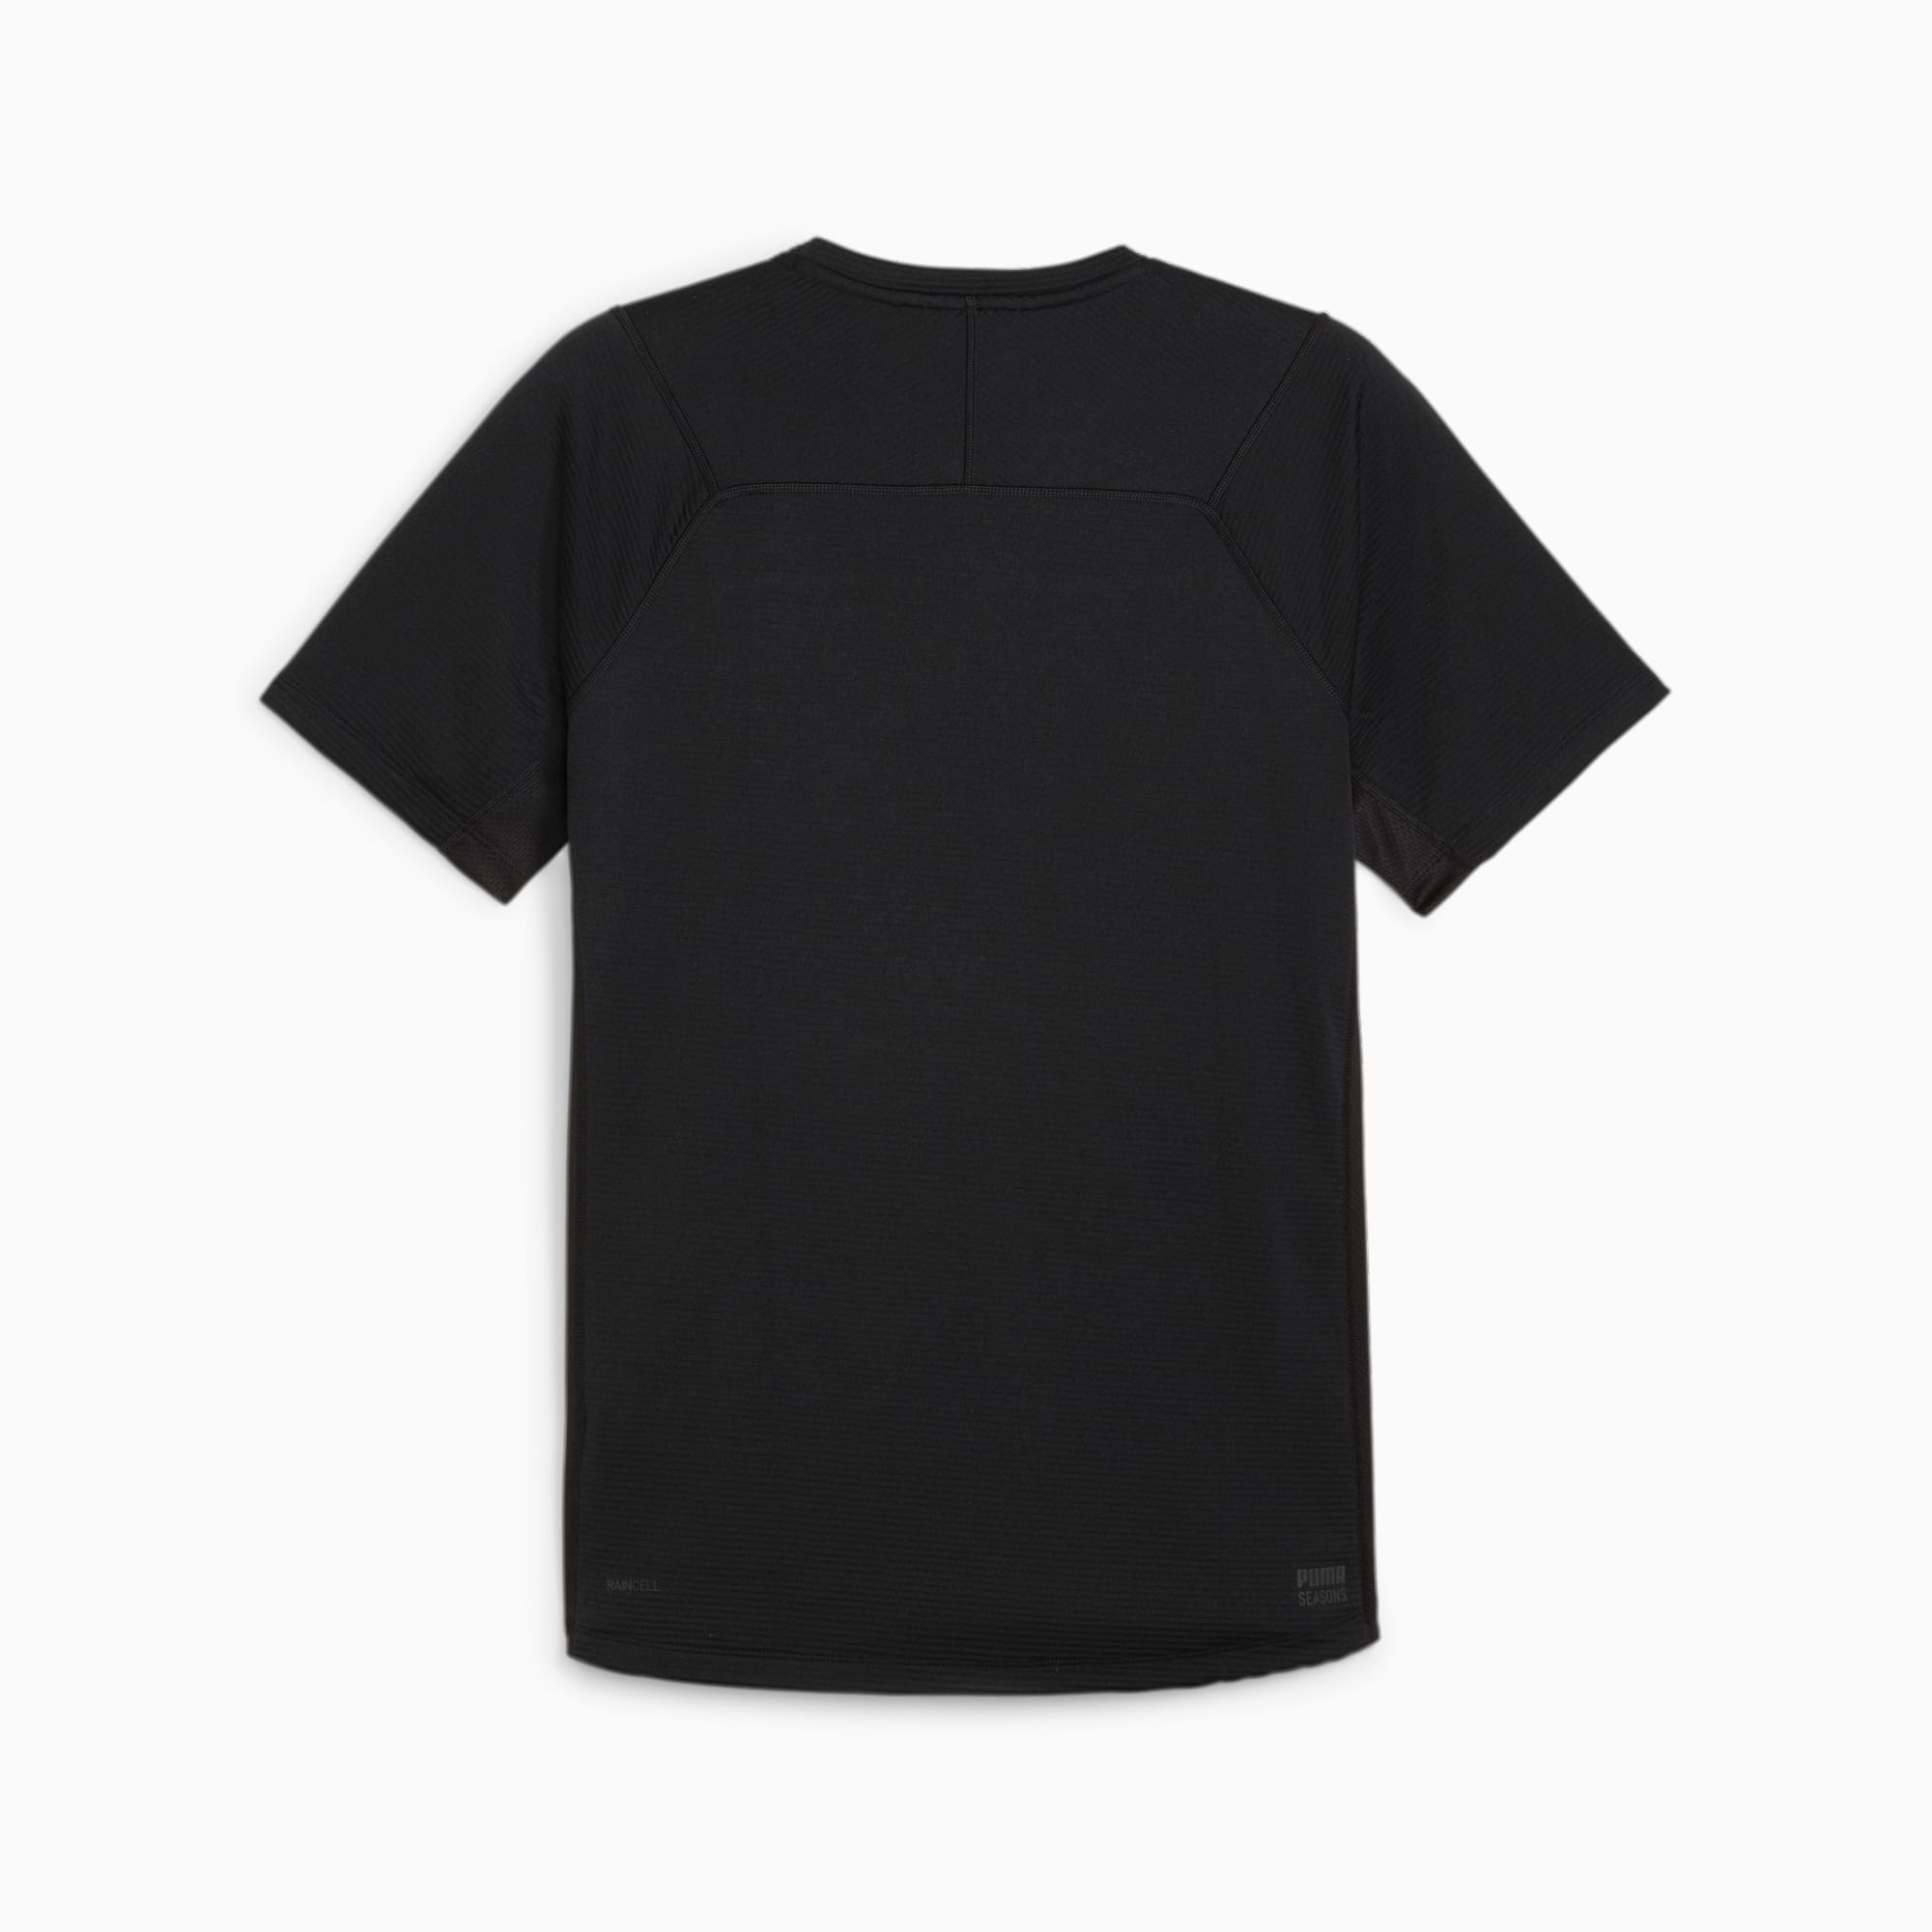 PUMA Seasons Short Sleeve Men's T-Shirt, Black, Size L, Clothing